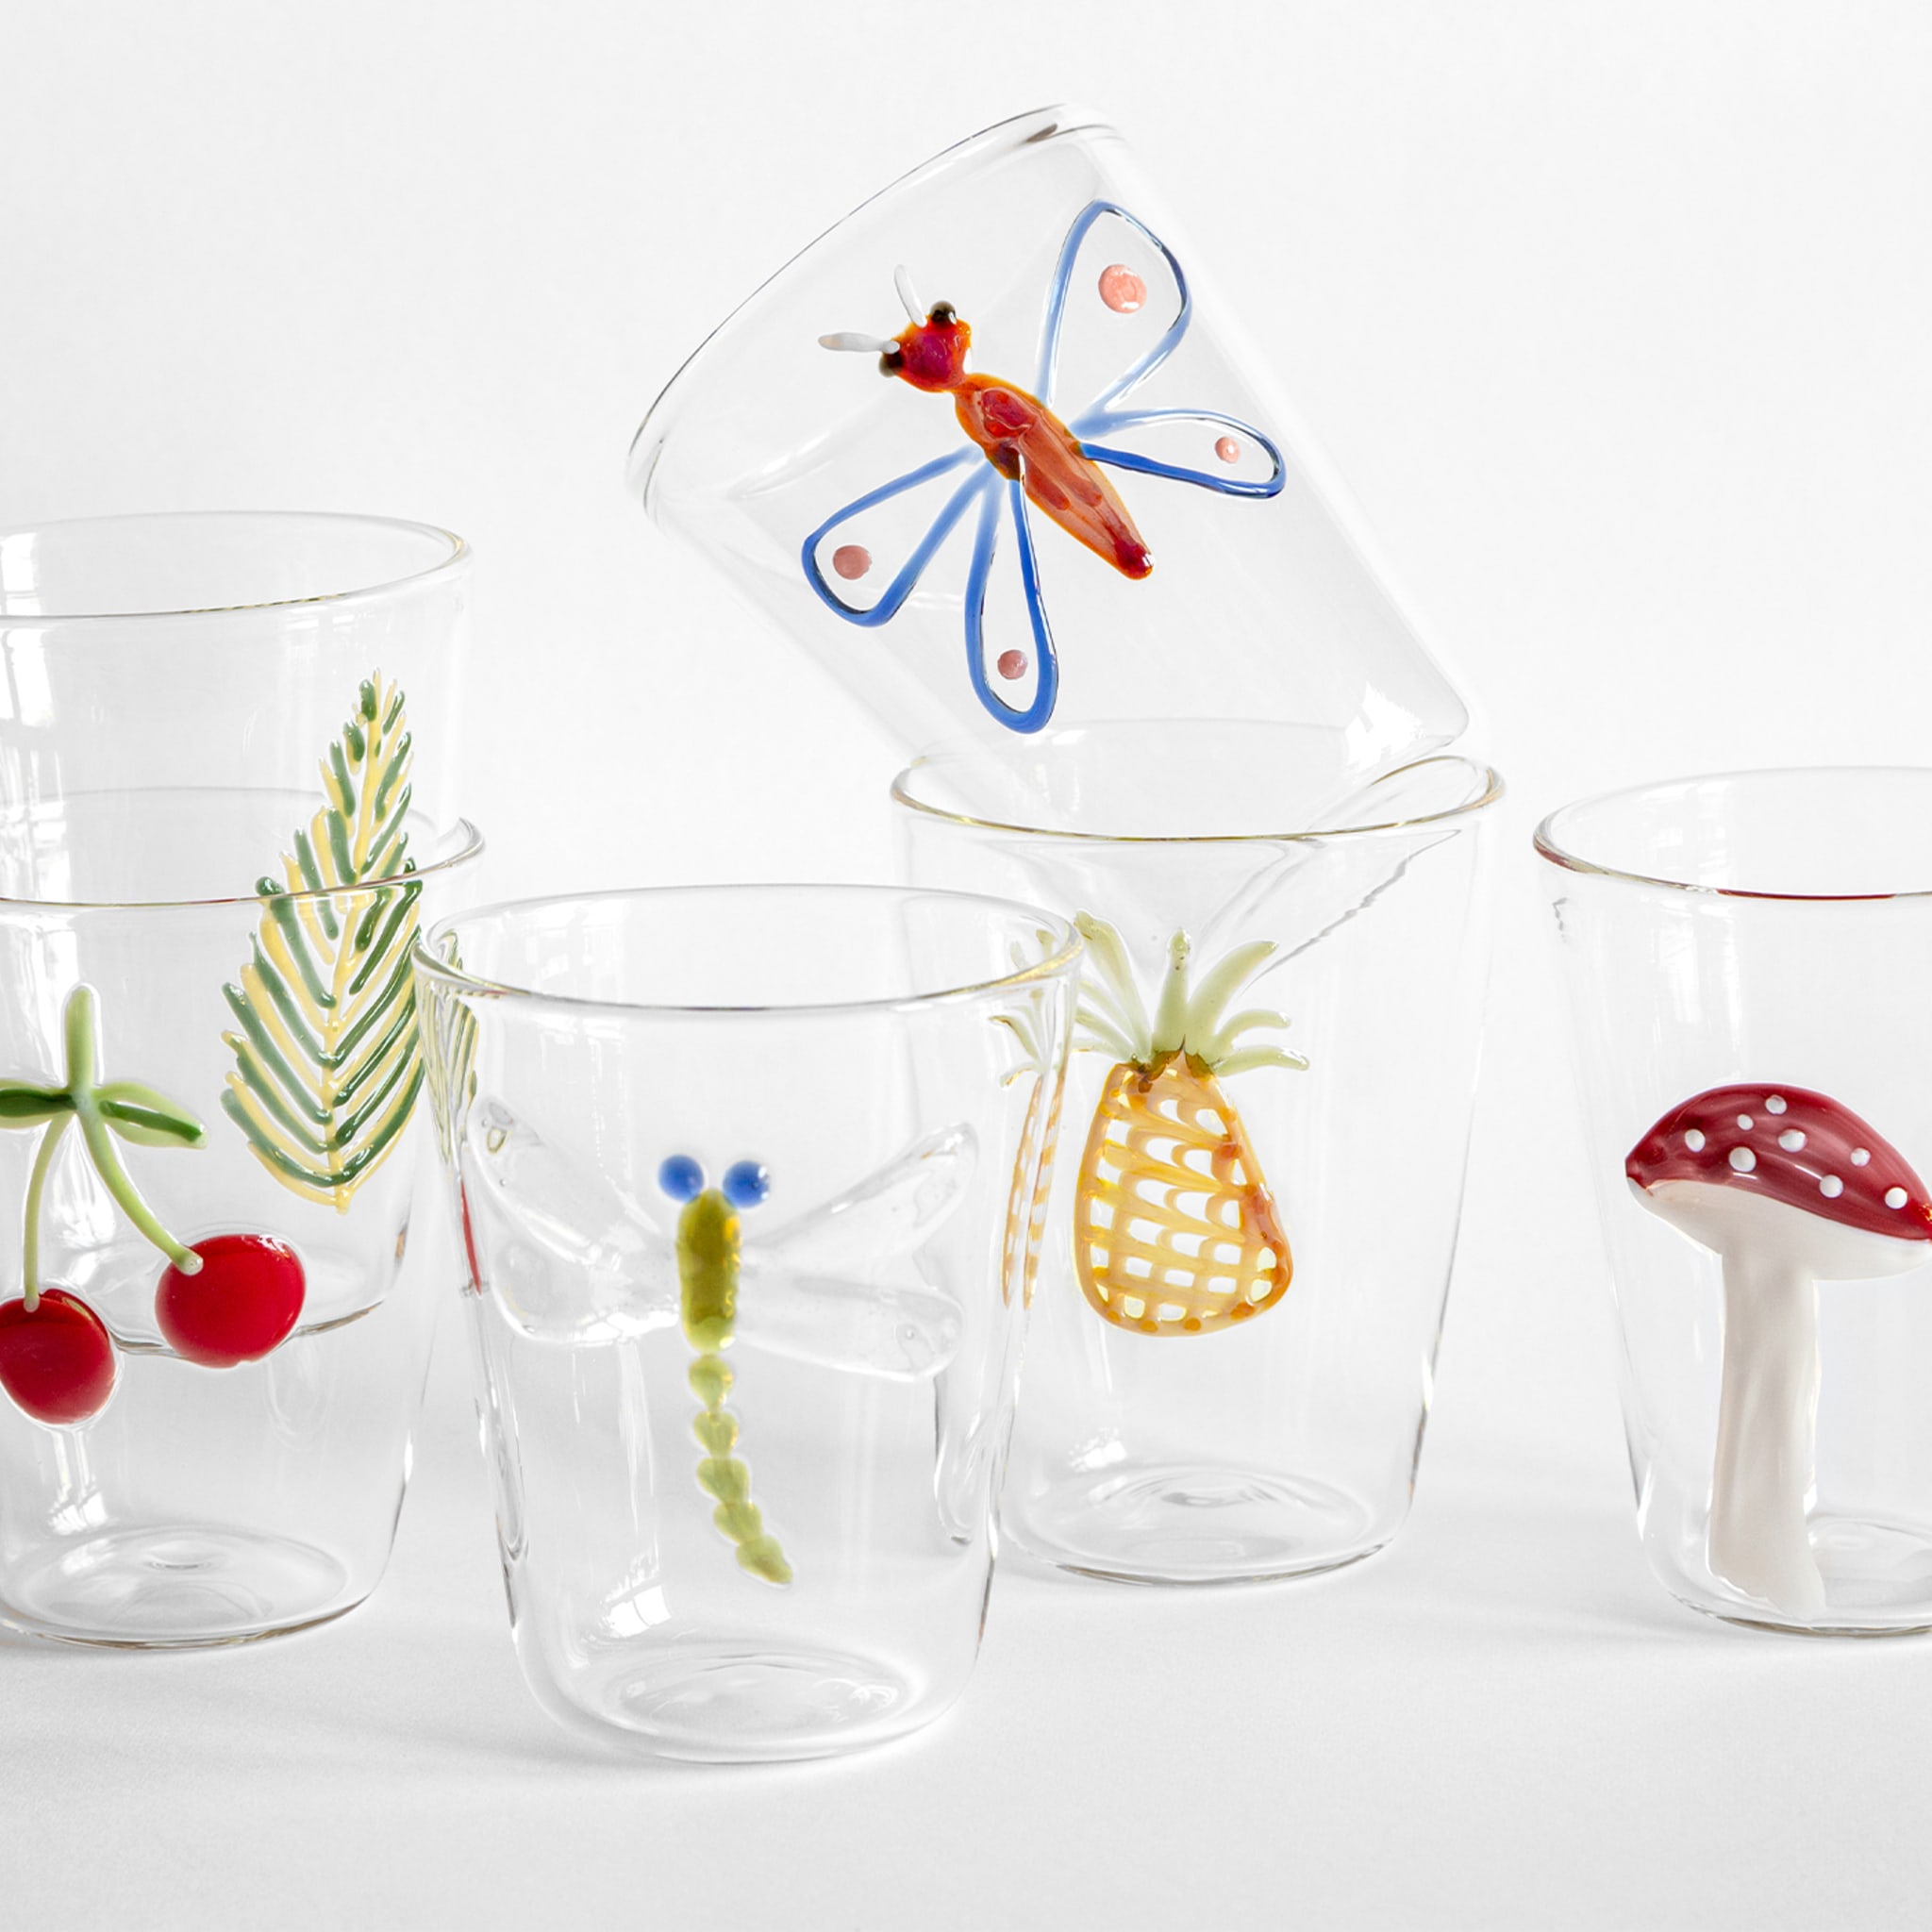 Cabinet De Curiosités Set Of 6 Water Glasses With Natural Elements - Alternative view 1